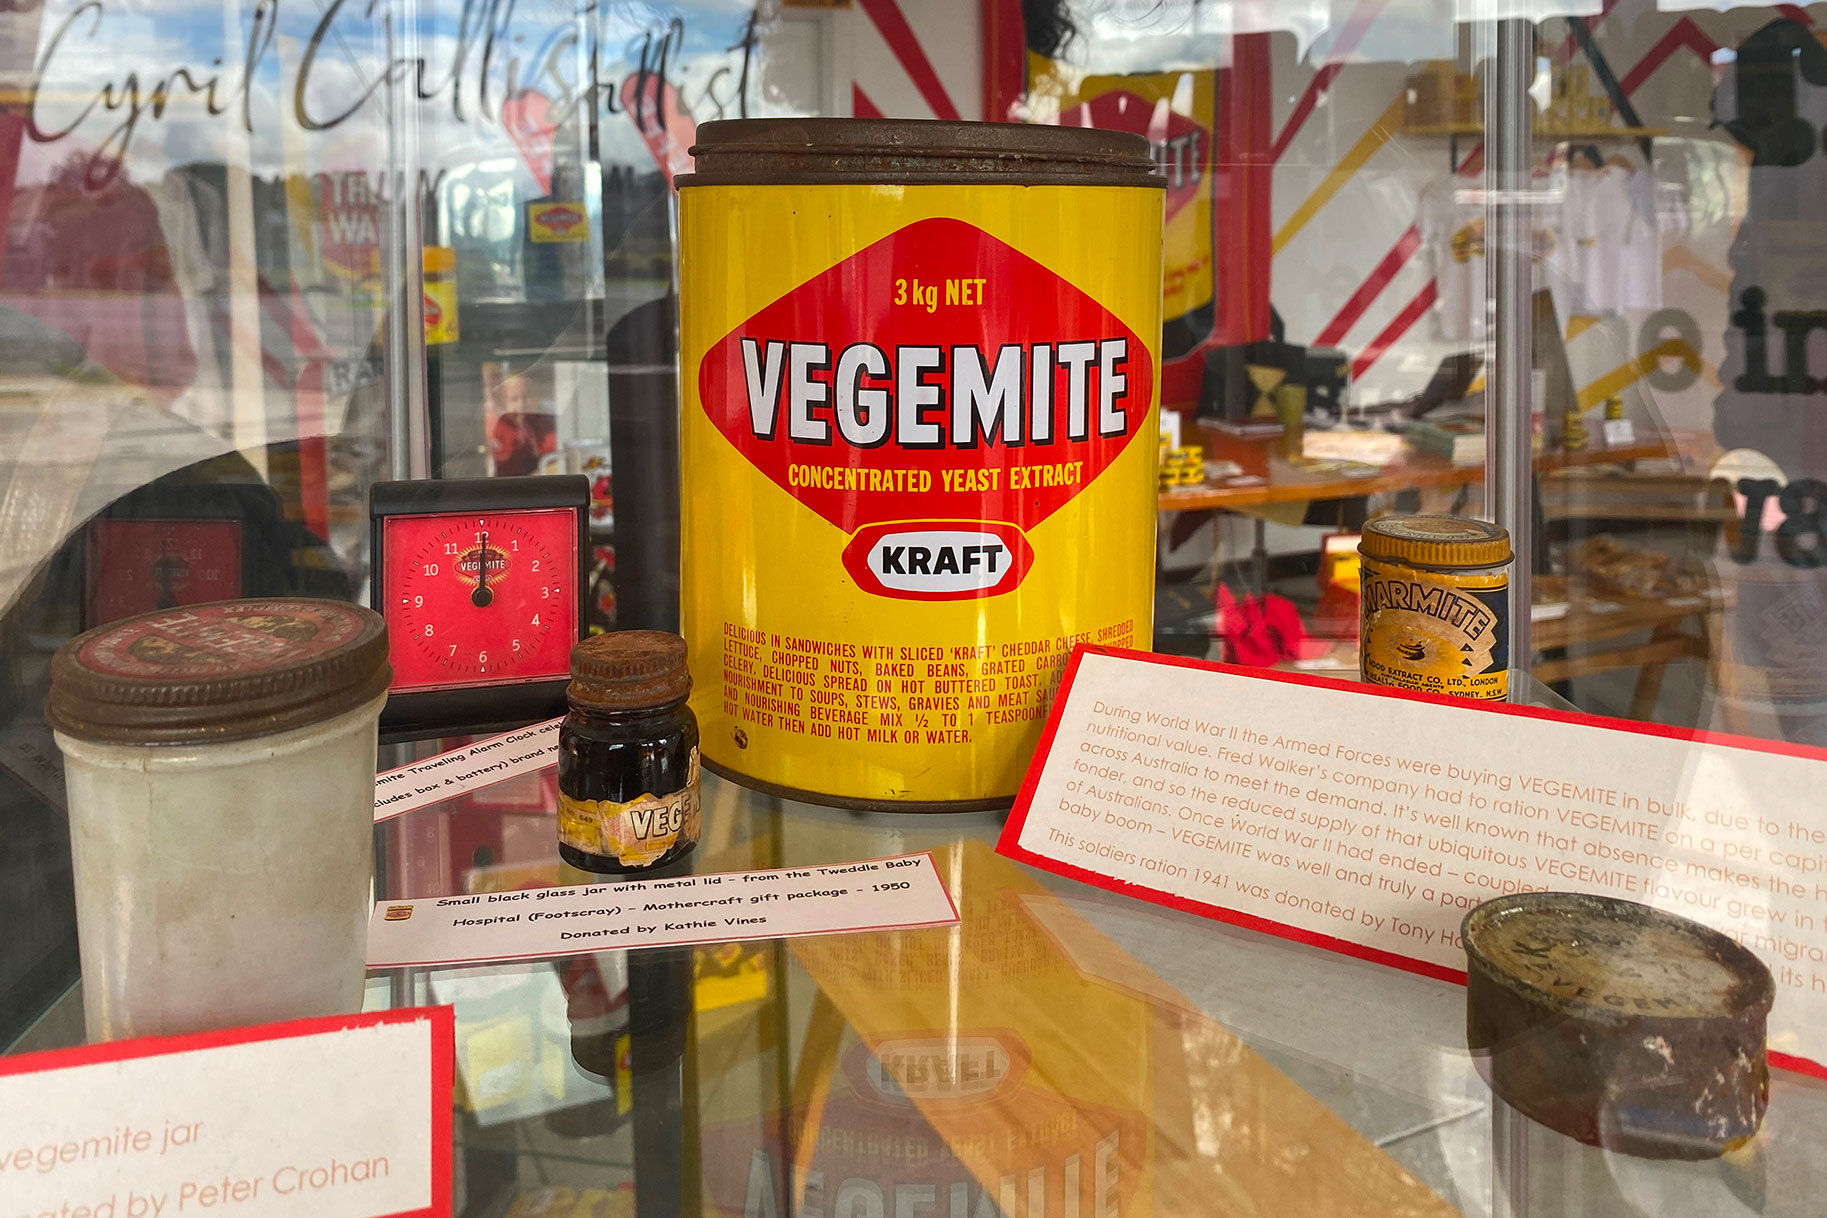 Early examples of Vegemite jars